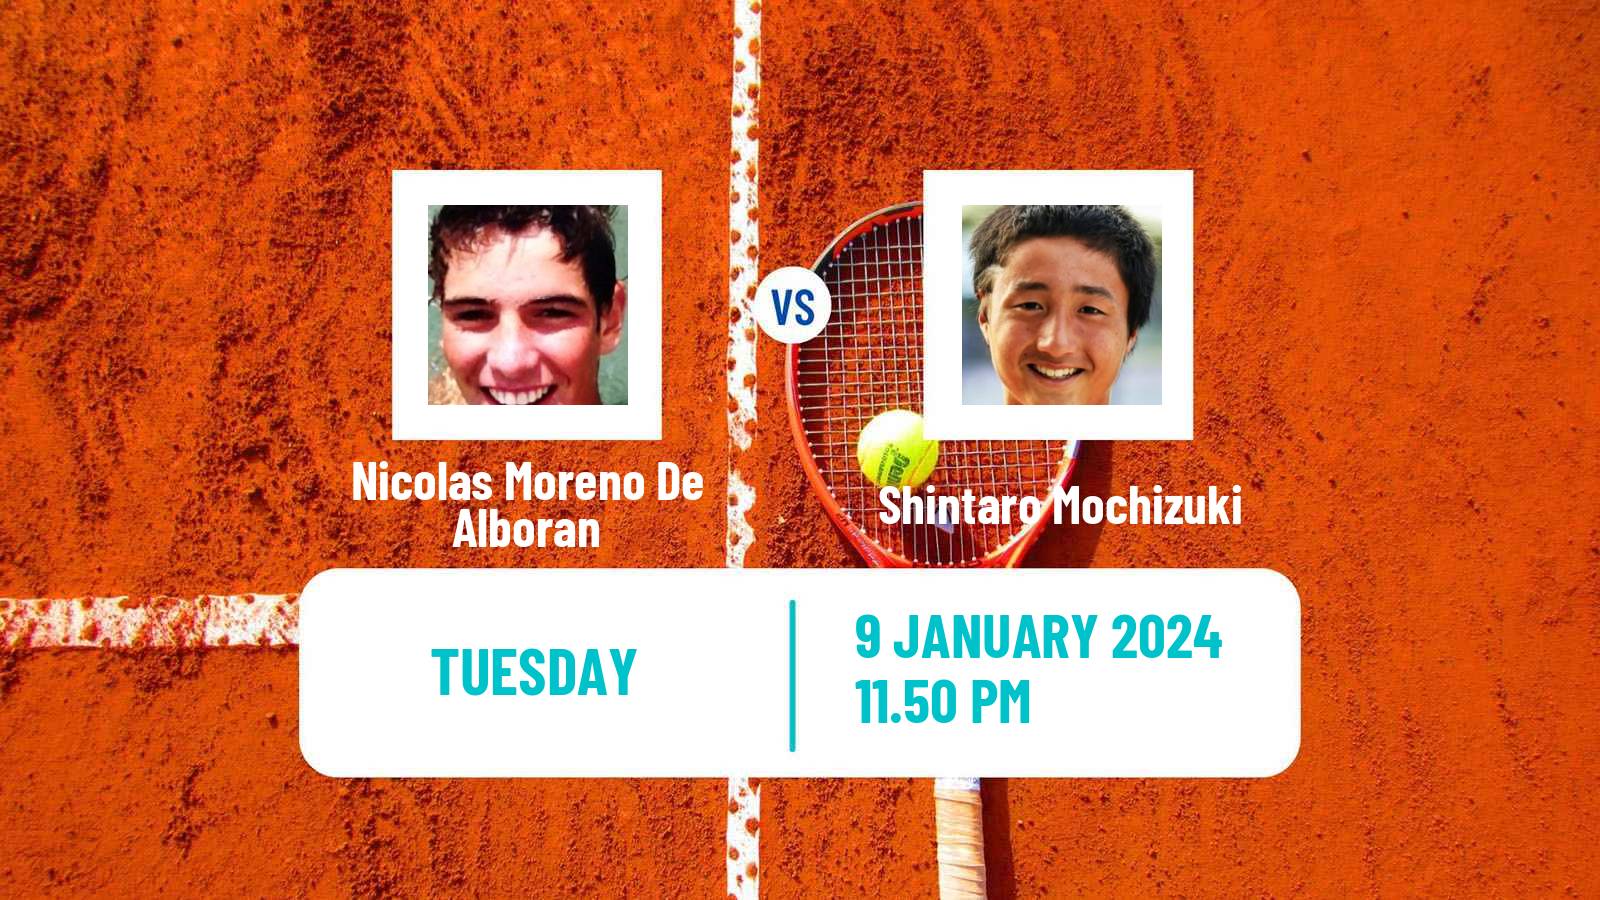 Tennis ATP Australian Open Nicolas Moreno De Alboran - Shintaro Mochizuki